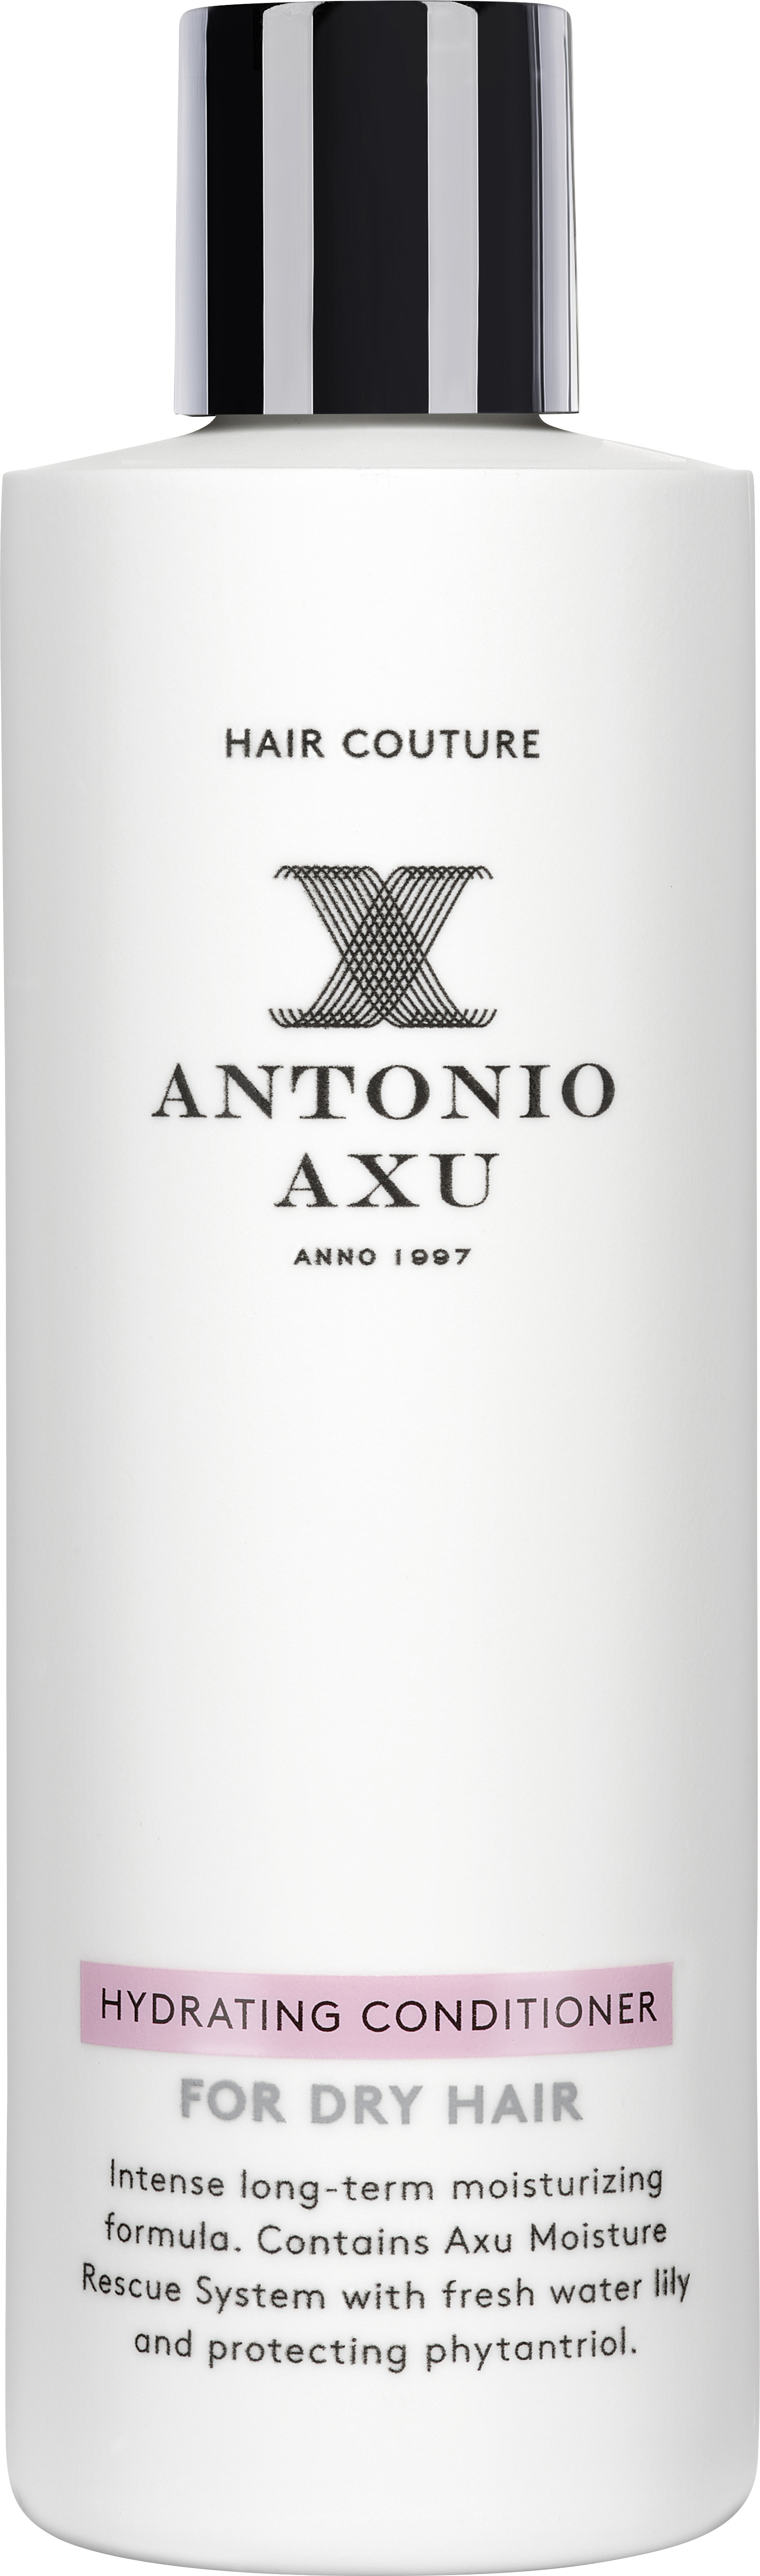 Antonio Axu Hydrating Conditioner 300 ml